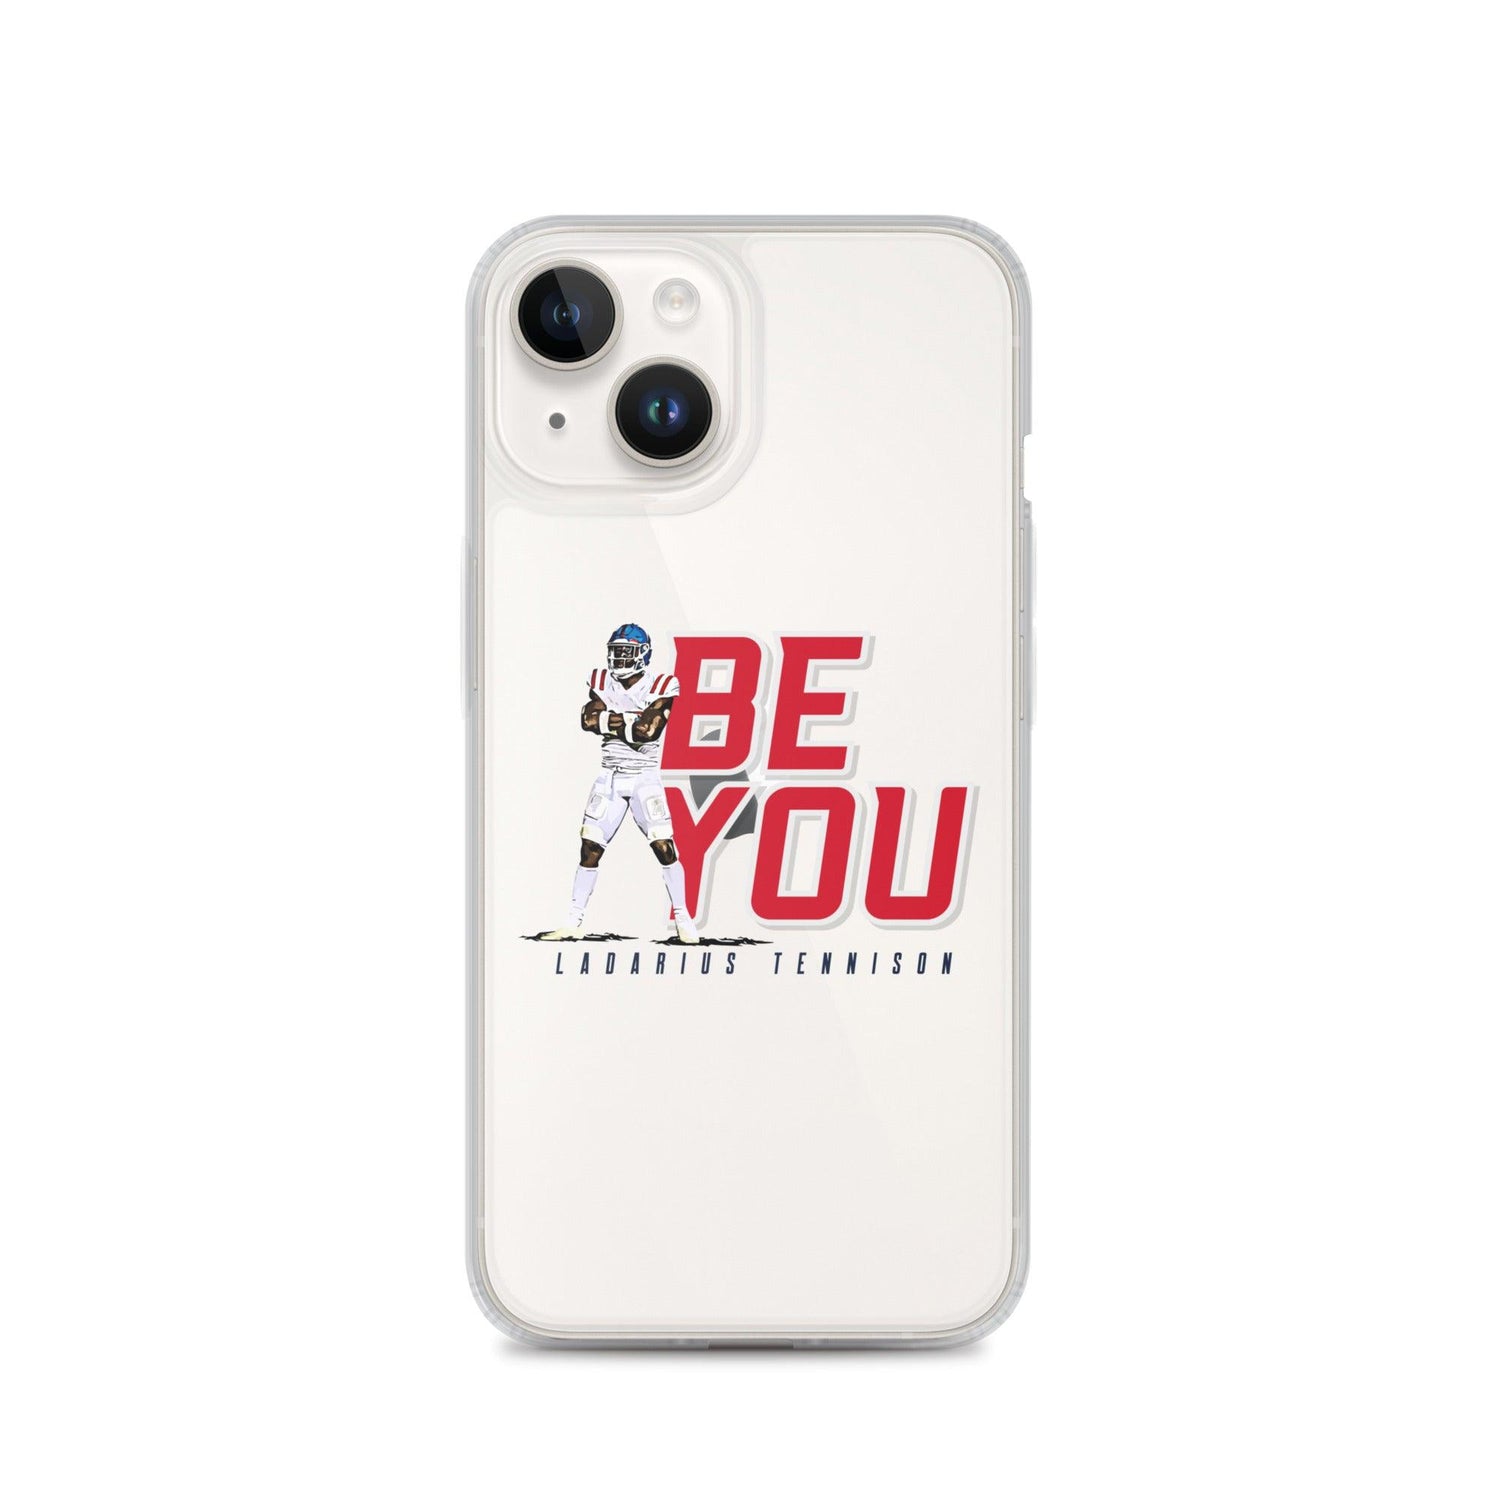 Ladarius Tennison "Be You" iPhone Case - Fan Arch